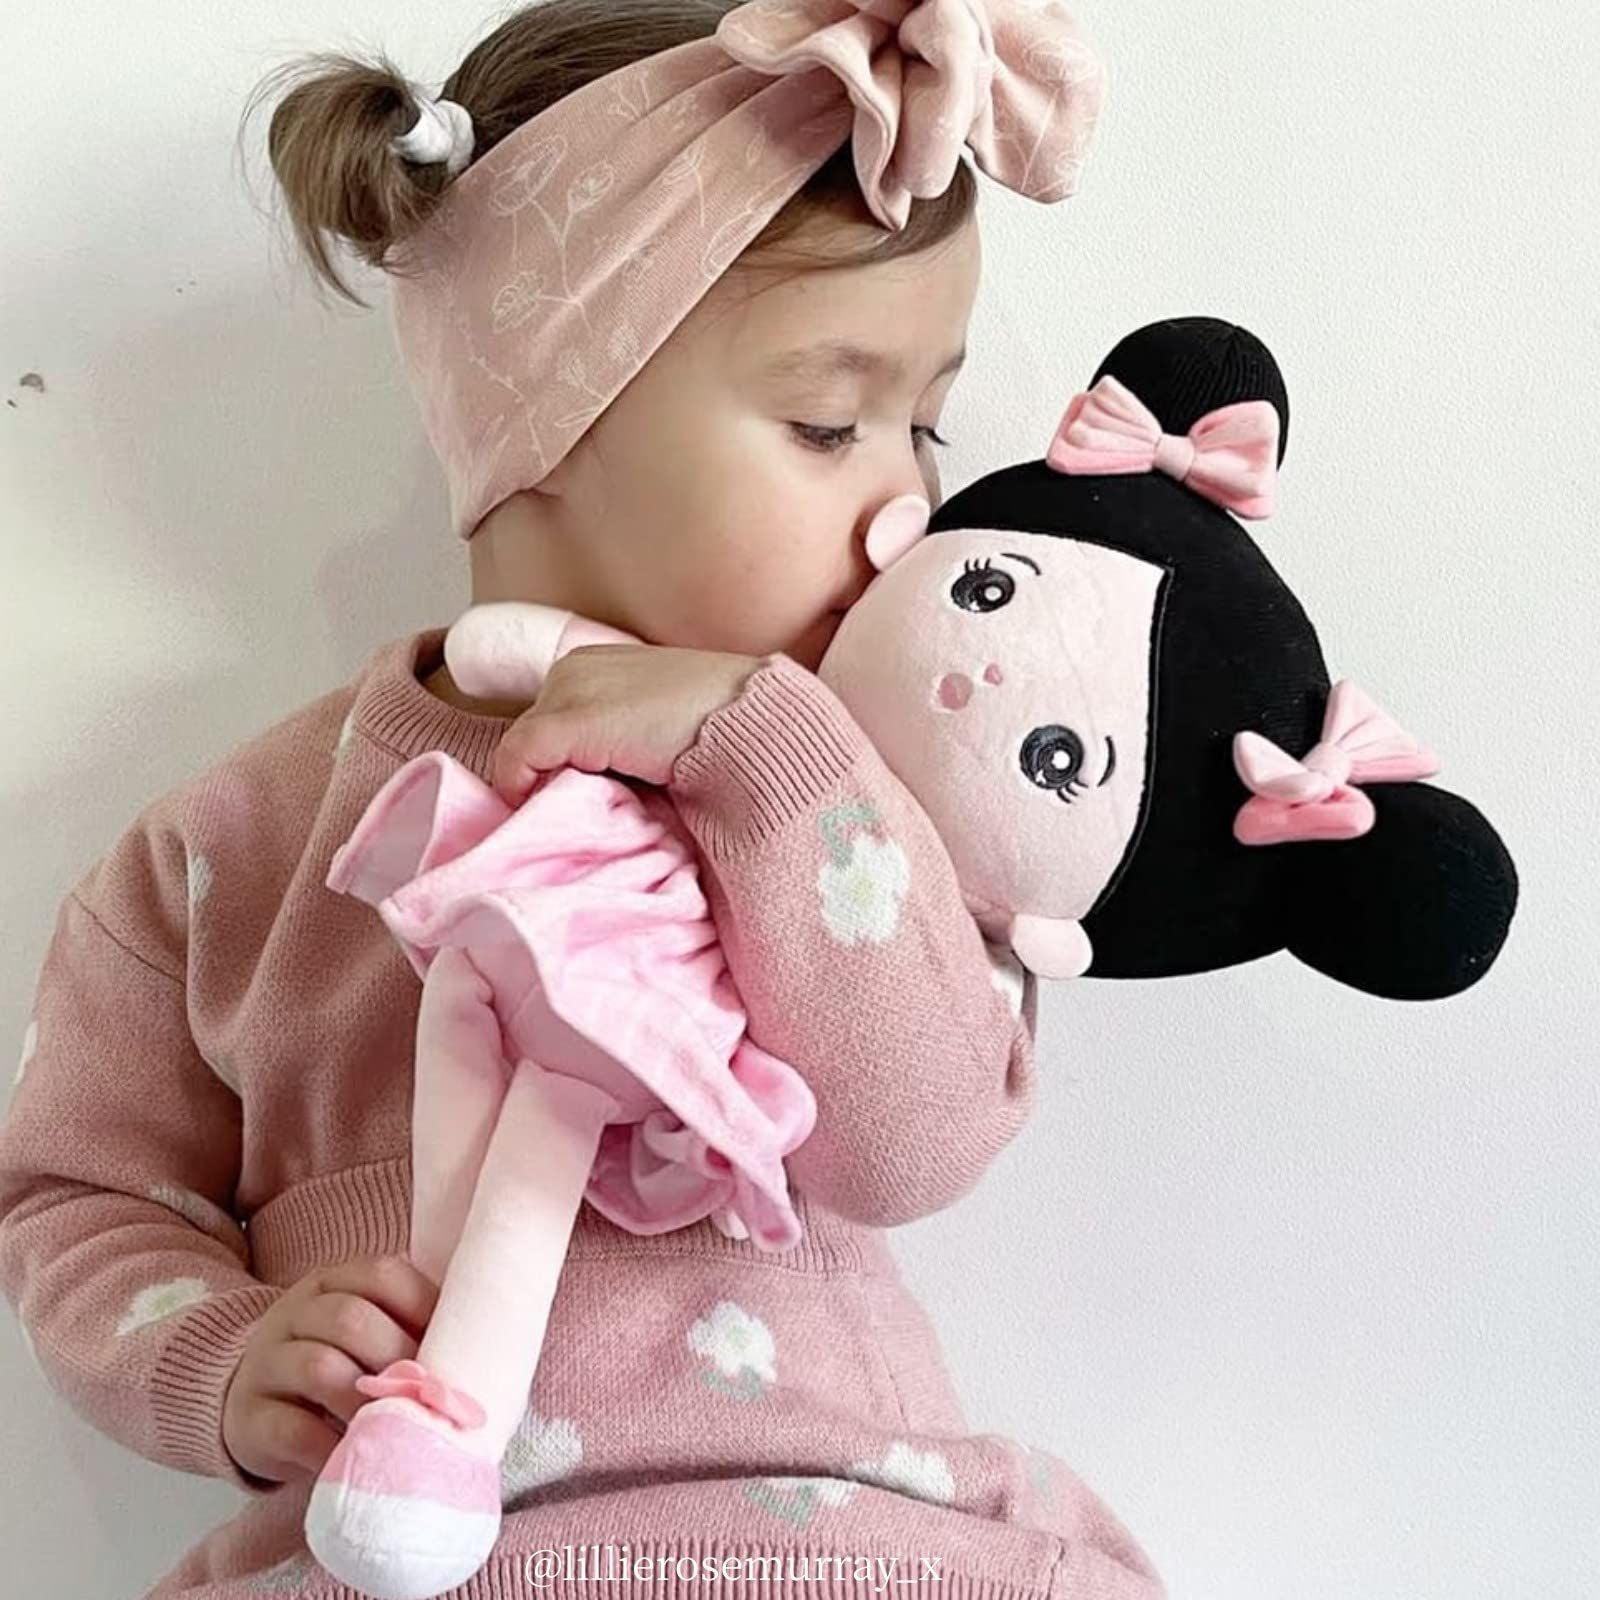 Starpony OUOZZZ 15'' Baby Dolls Girls Gifts Plush Soft Rag Toy for 1 Year Old Kids 3